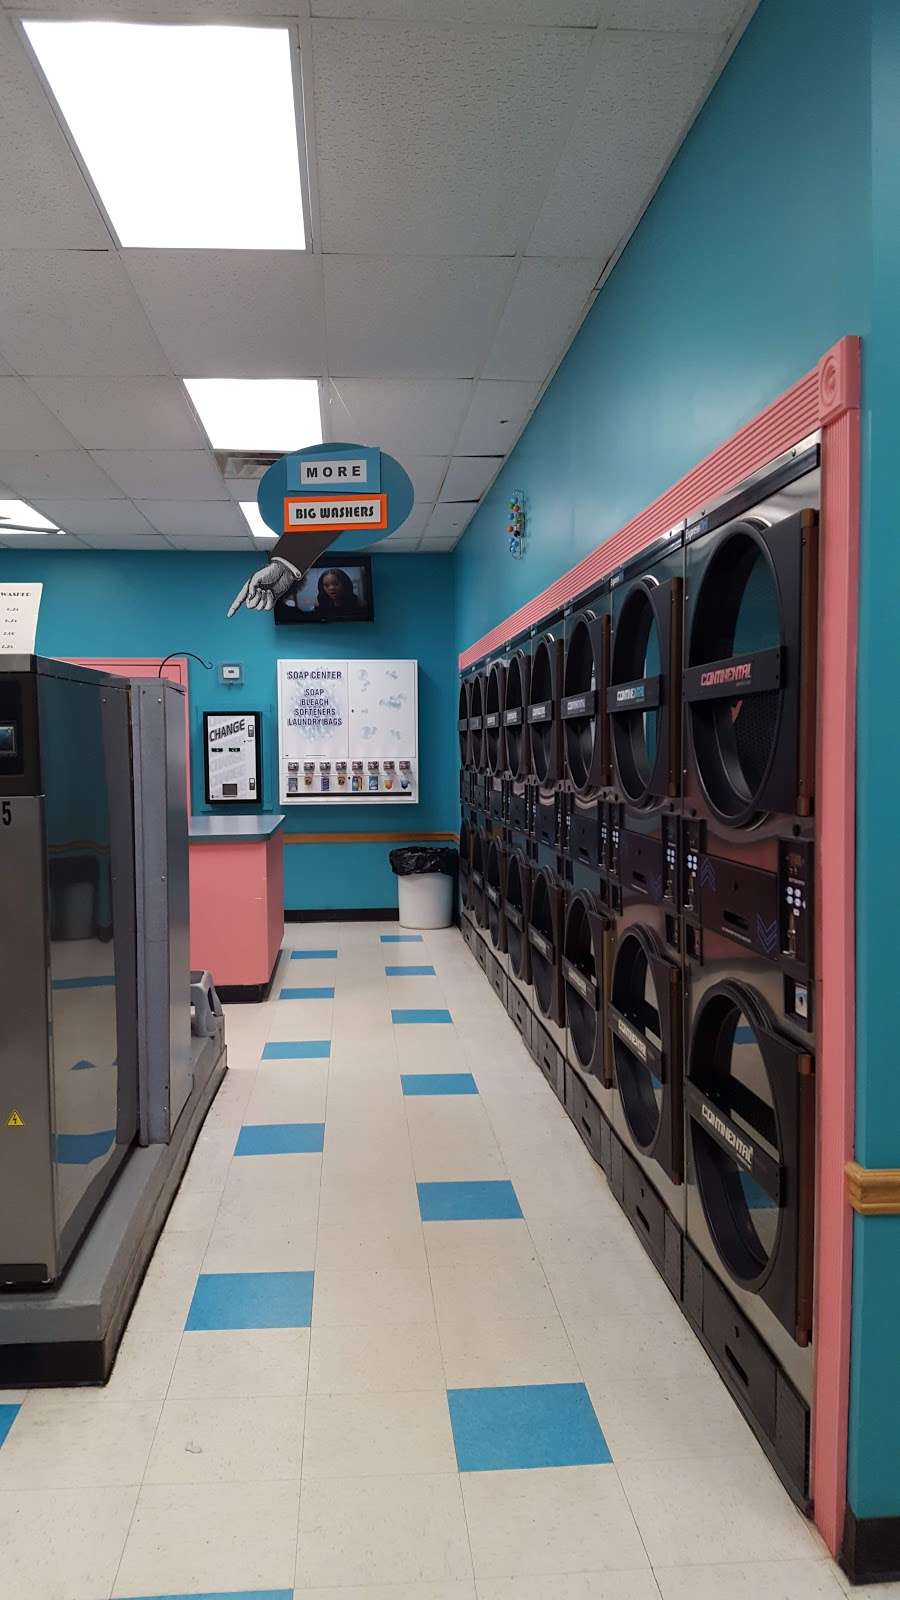 Atomic Laundromat | 100 Kirk Road, Narrowsburg, NY 12764, USA | Phone: (570) 591-0541